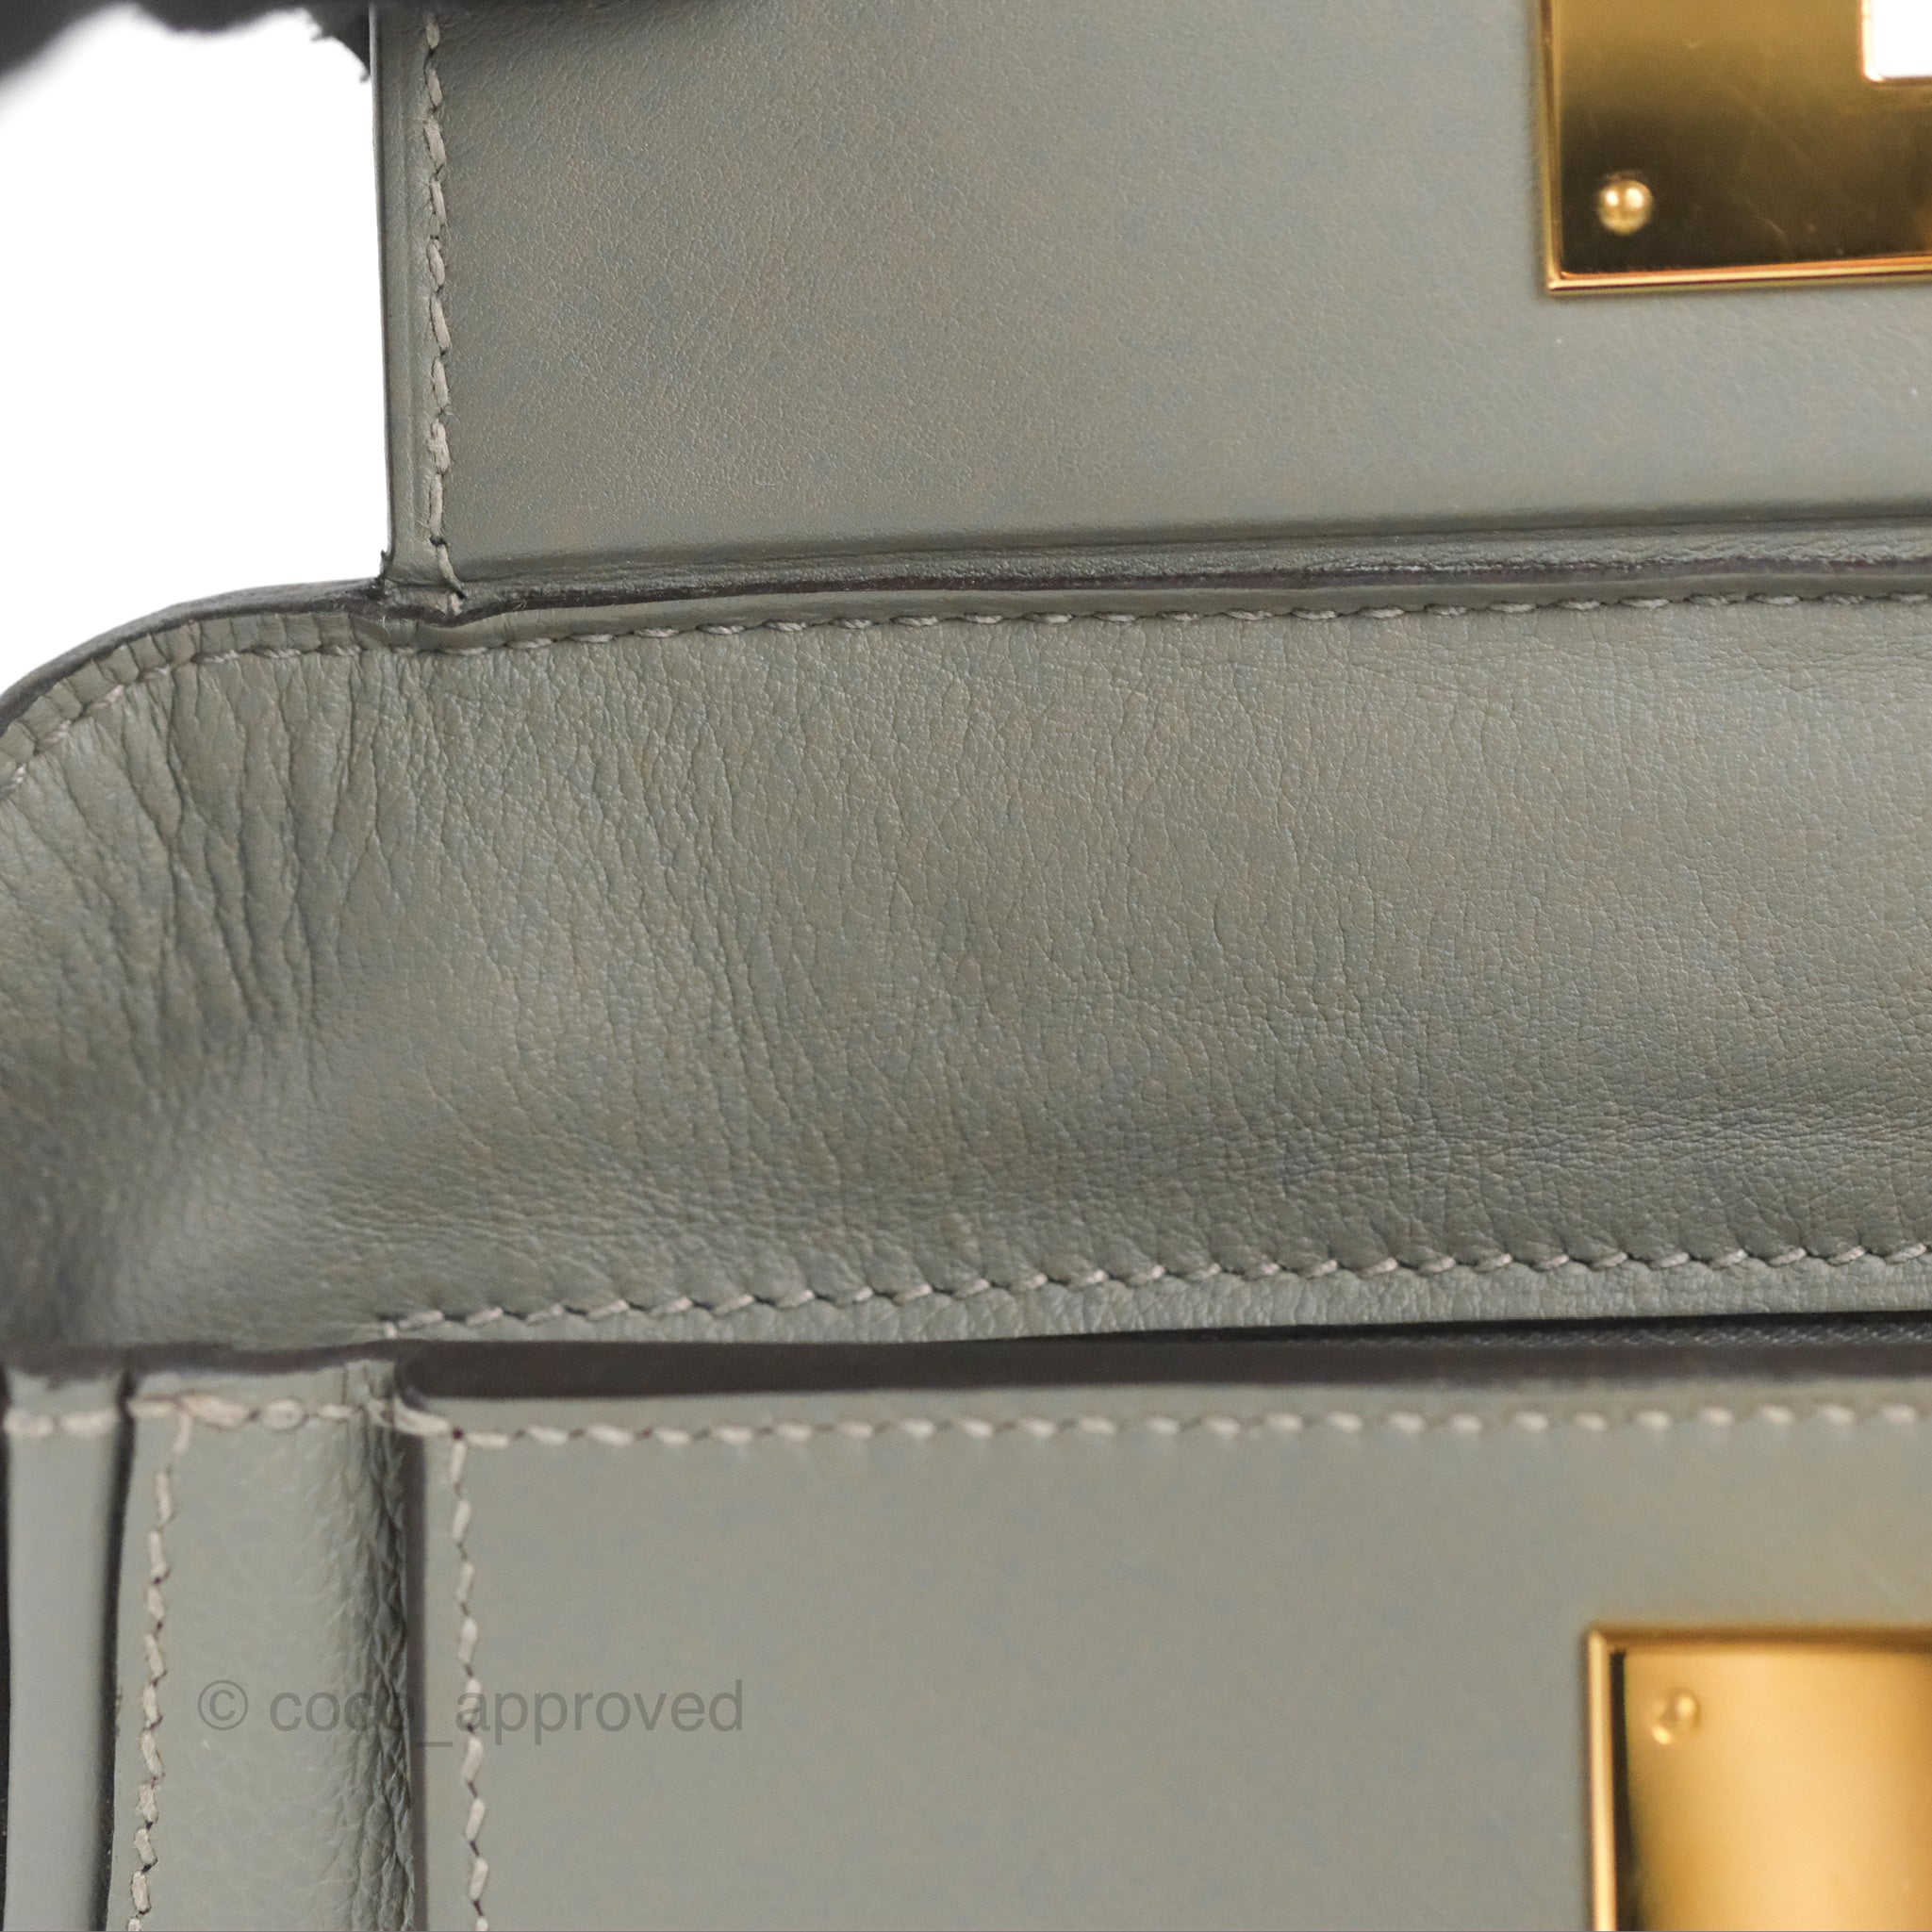 Hermes 24/24 21 Mini Bag Gris Meyer Evercolor / Swift Leather